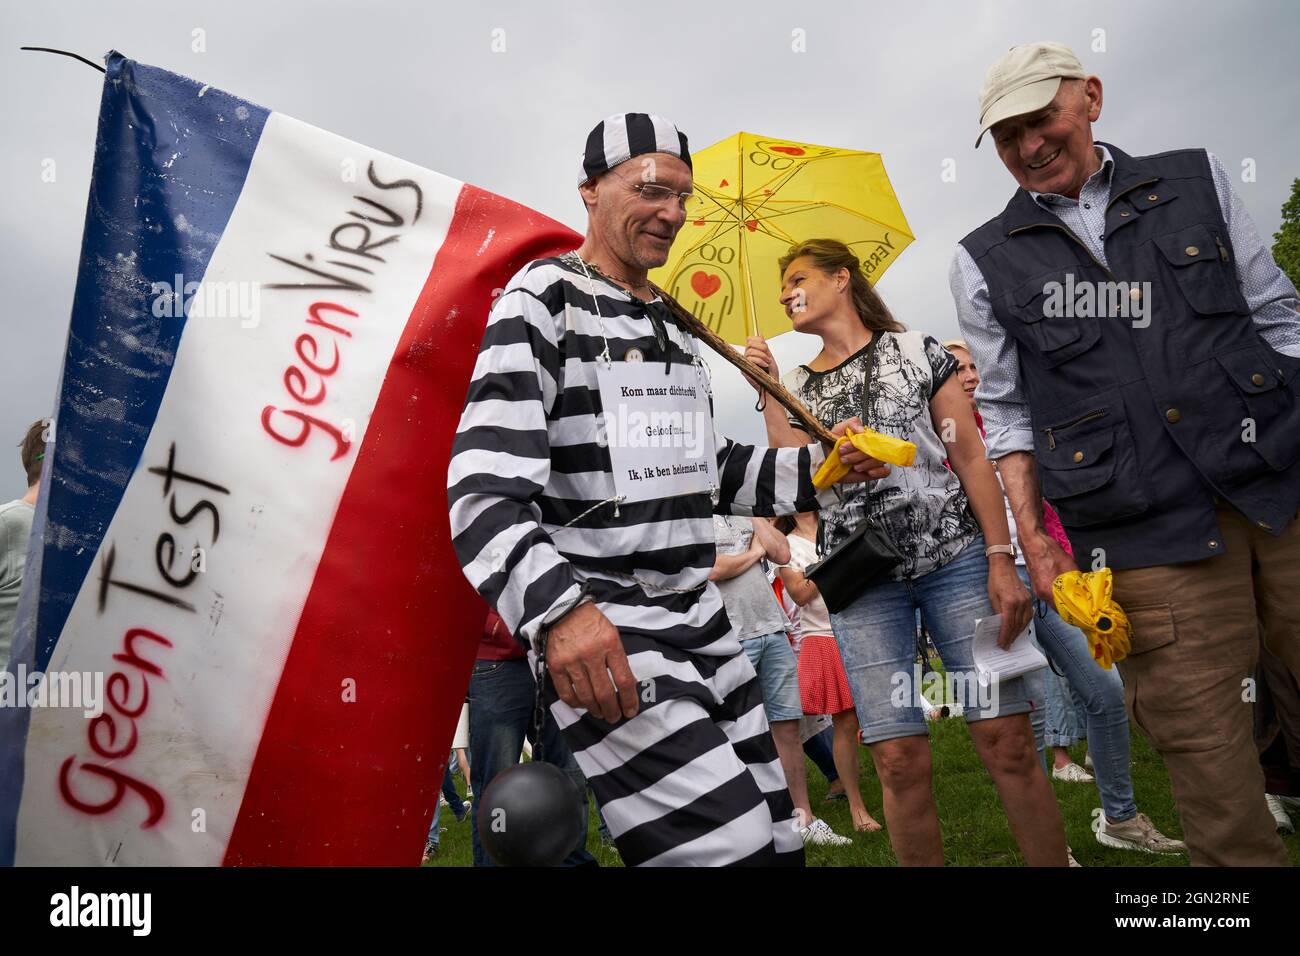 Man in prisoner costume attends anti-vaccine rally Stock Photo